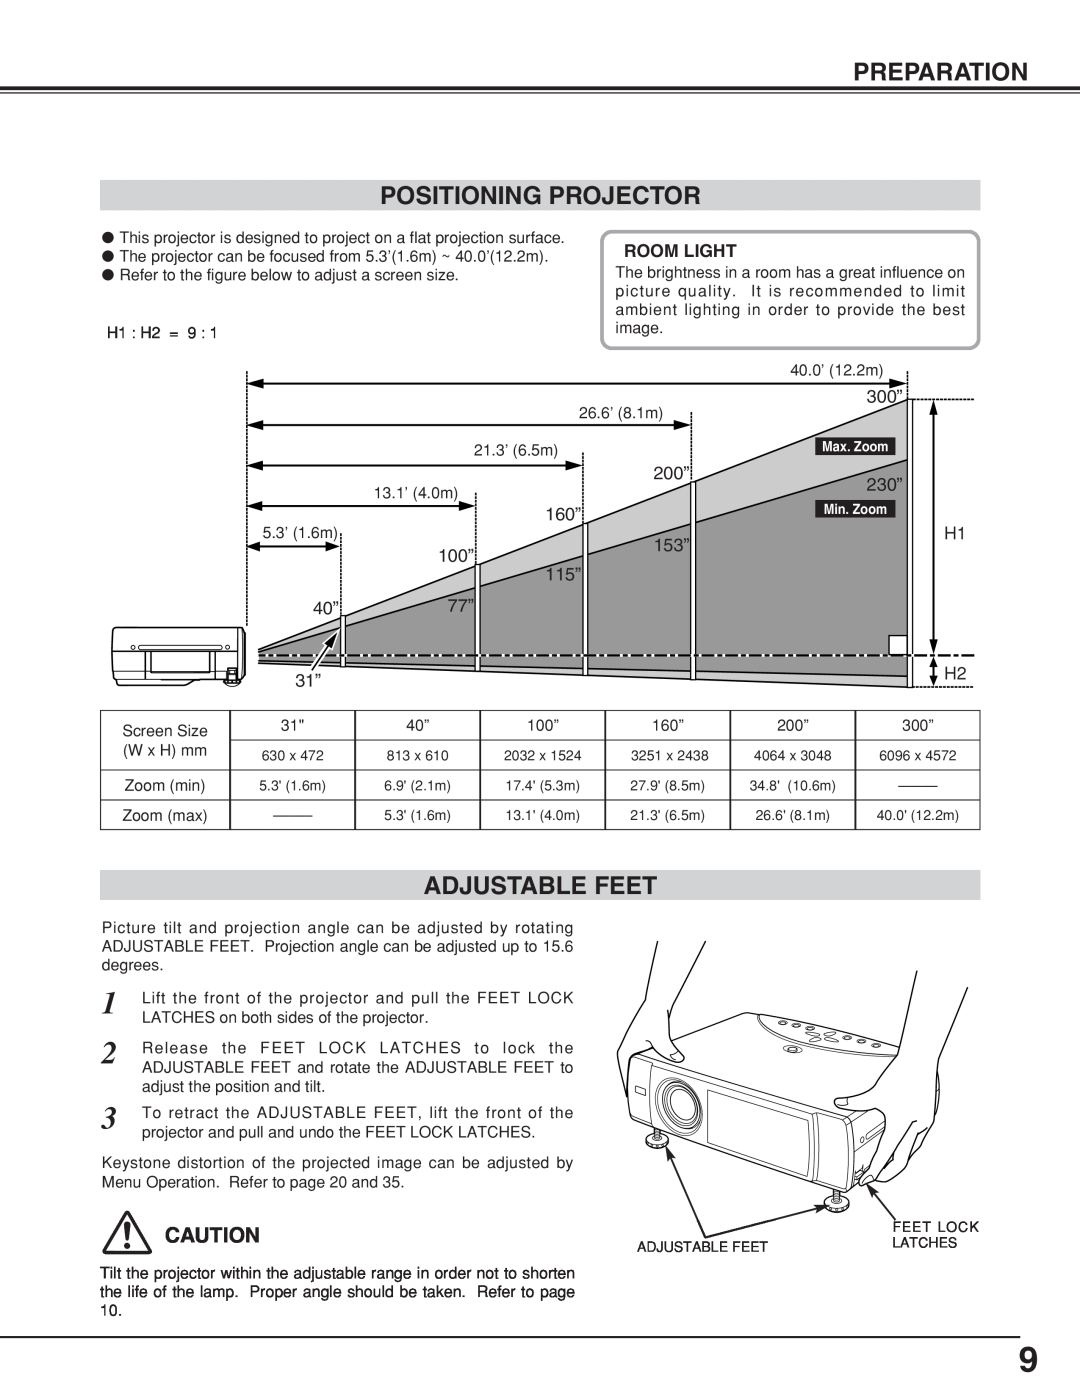 Eiki LC-XNB5M Preparation Positioning Projector, Adjustable Feet, 300”, 100” 40”77”, 160” 115”, 200” 153”, 230” 